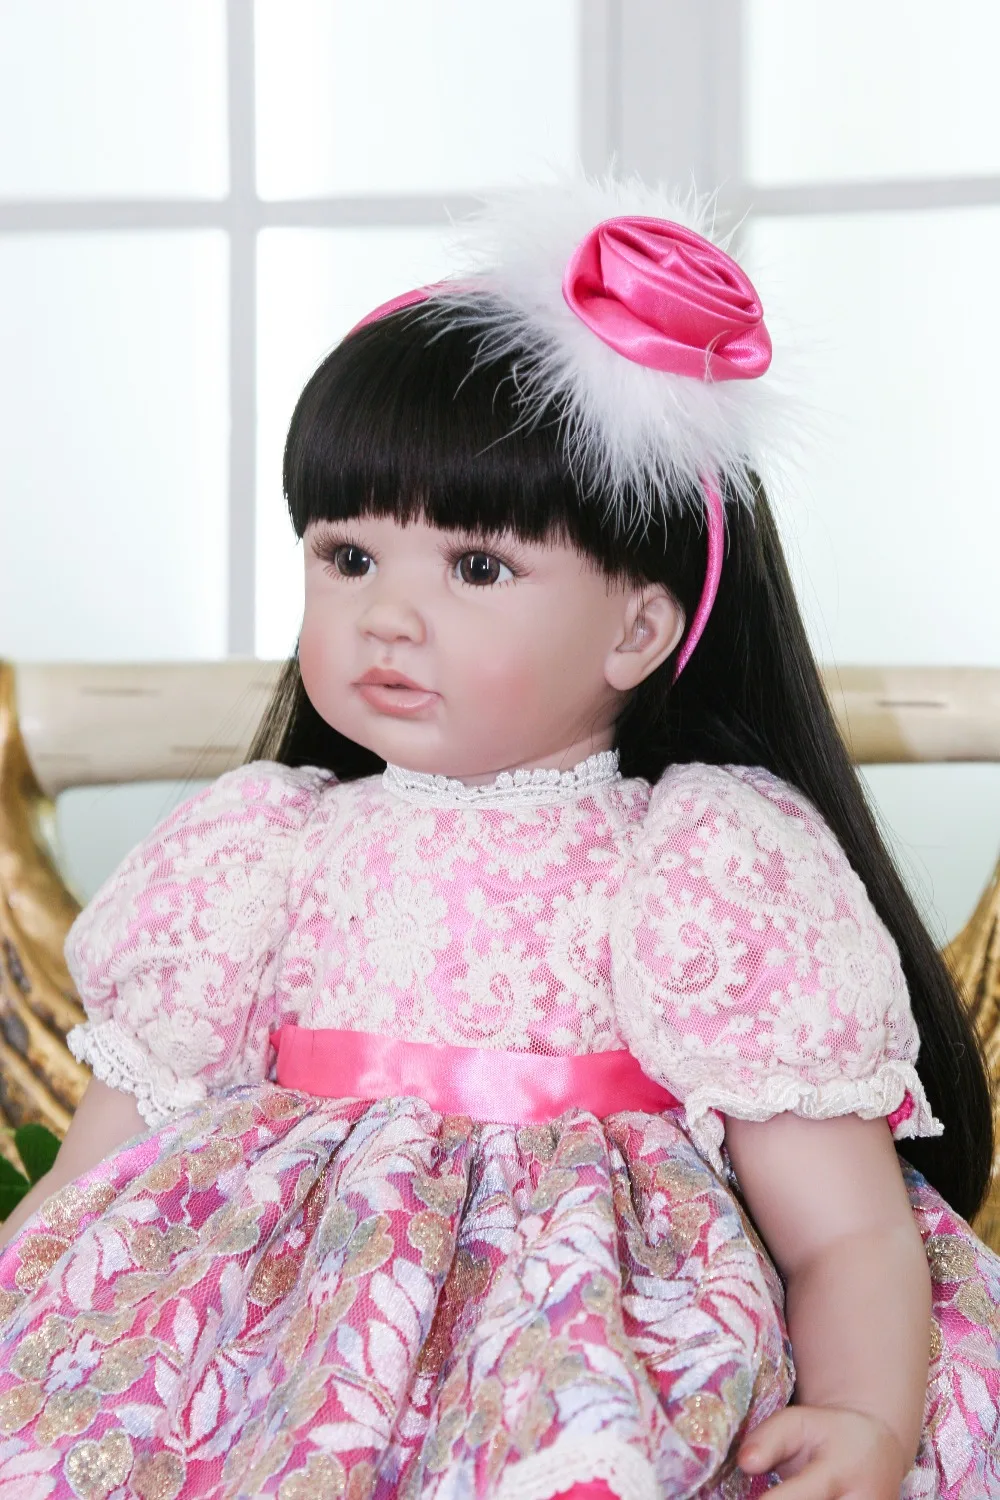 

DollMai Exquisite Bebe reborn toddler princess Girl Handmade Silicone vinyl adorable Lifelike Baby Bonecas Kids toys